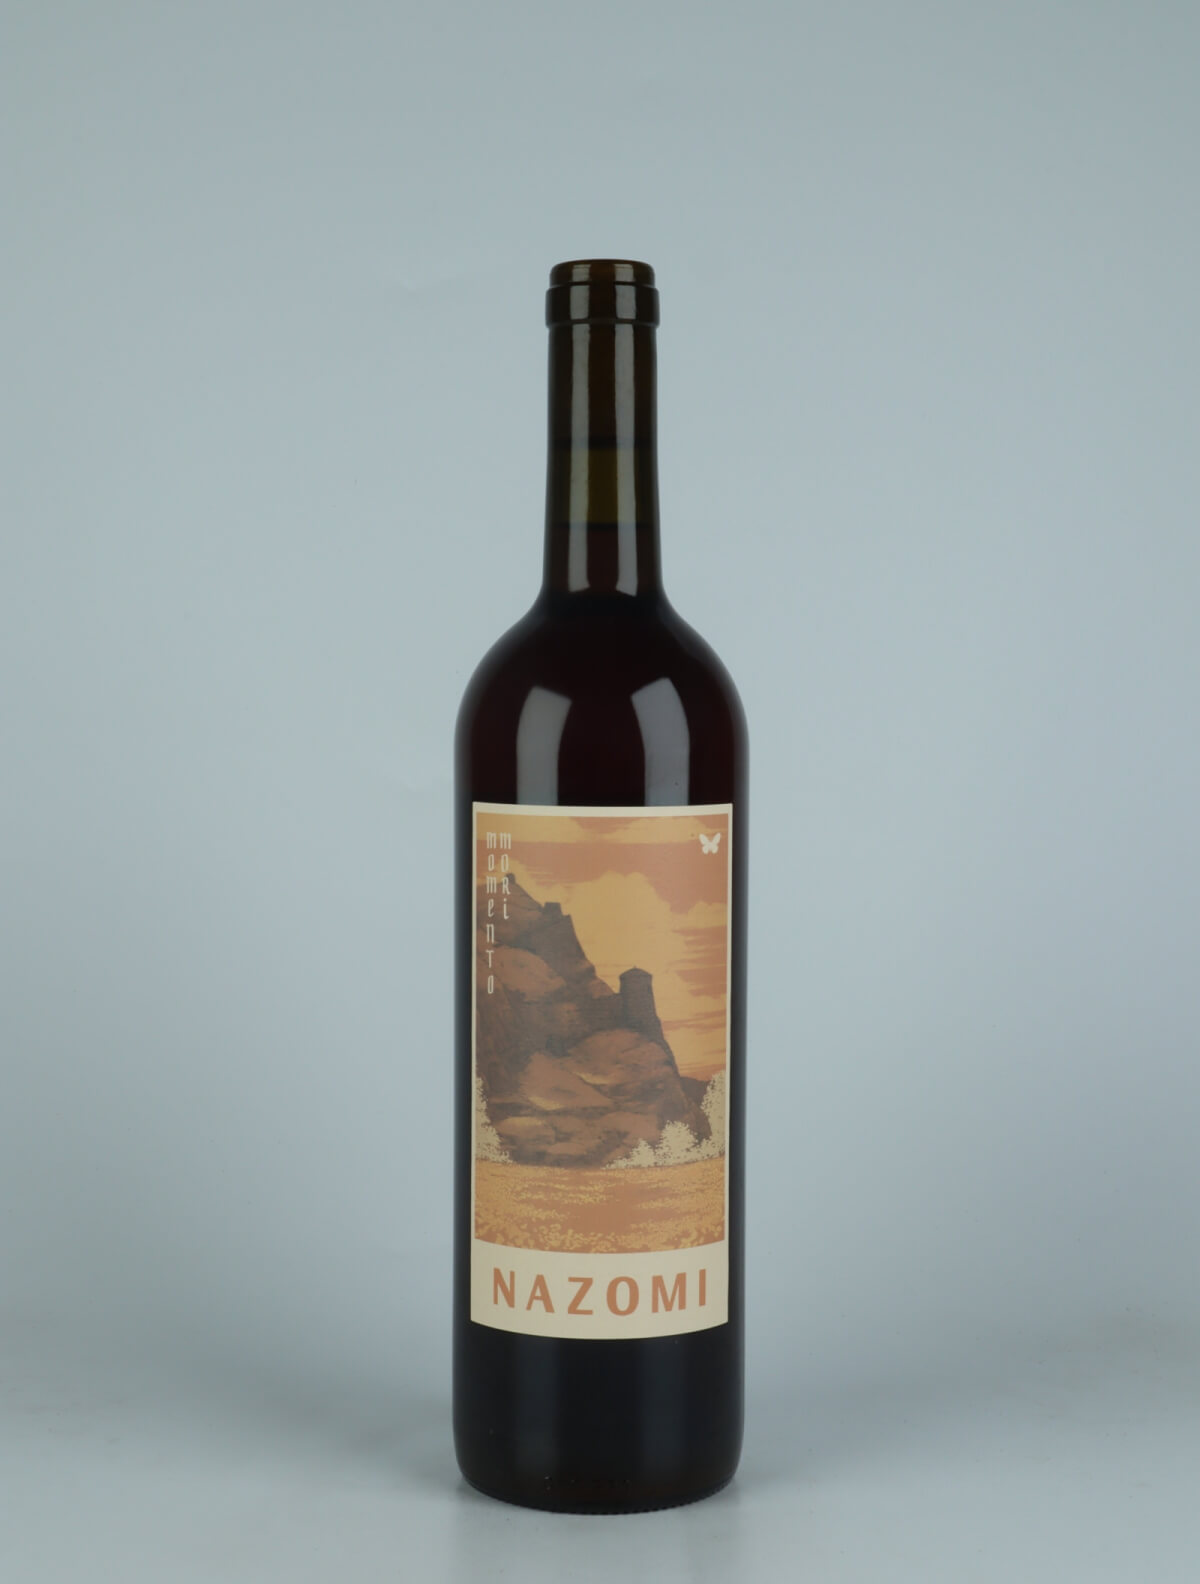 En flaske 2022 Nazomi Rødvin fra Momento Mori, Victoria i Australien